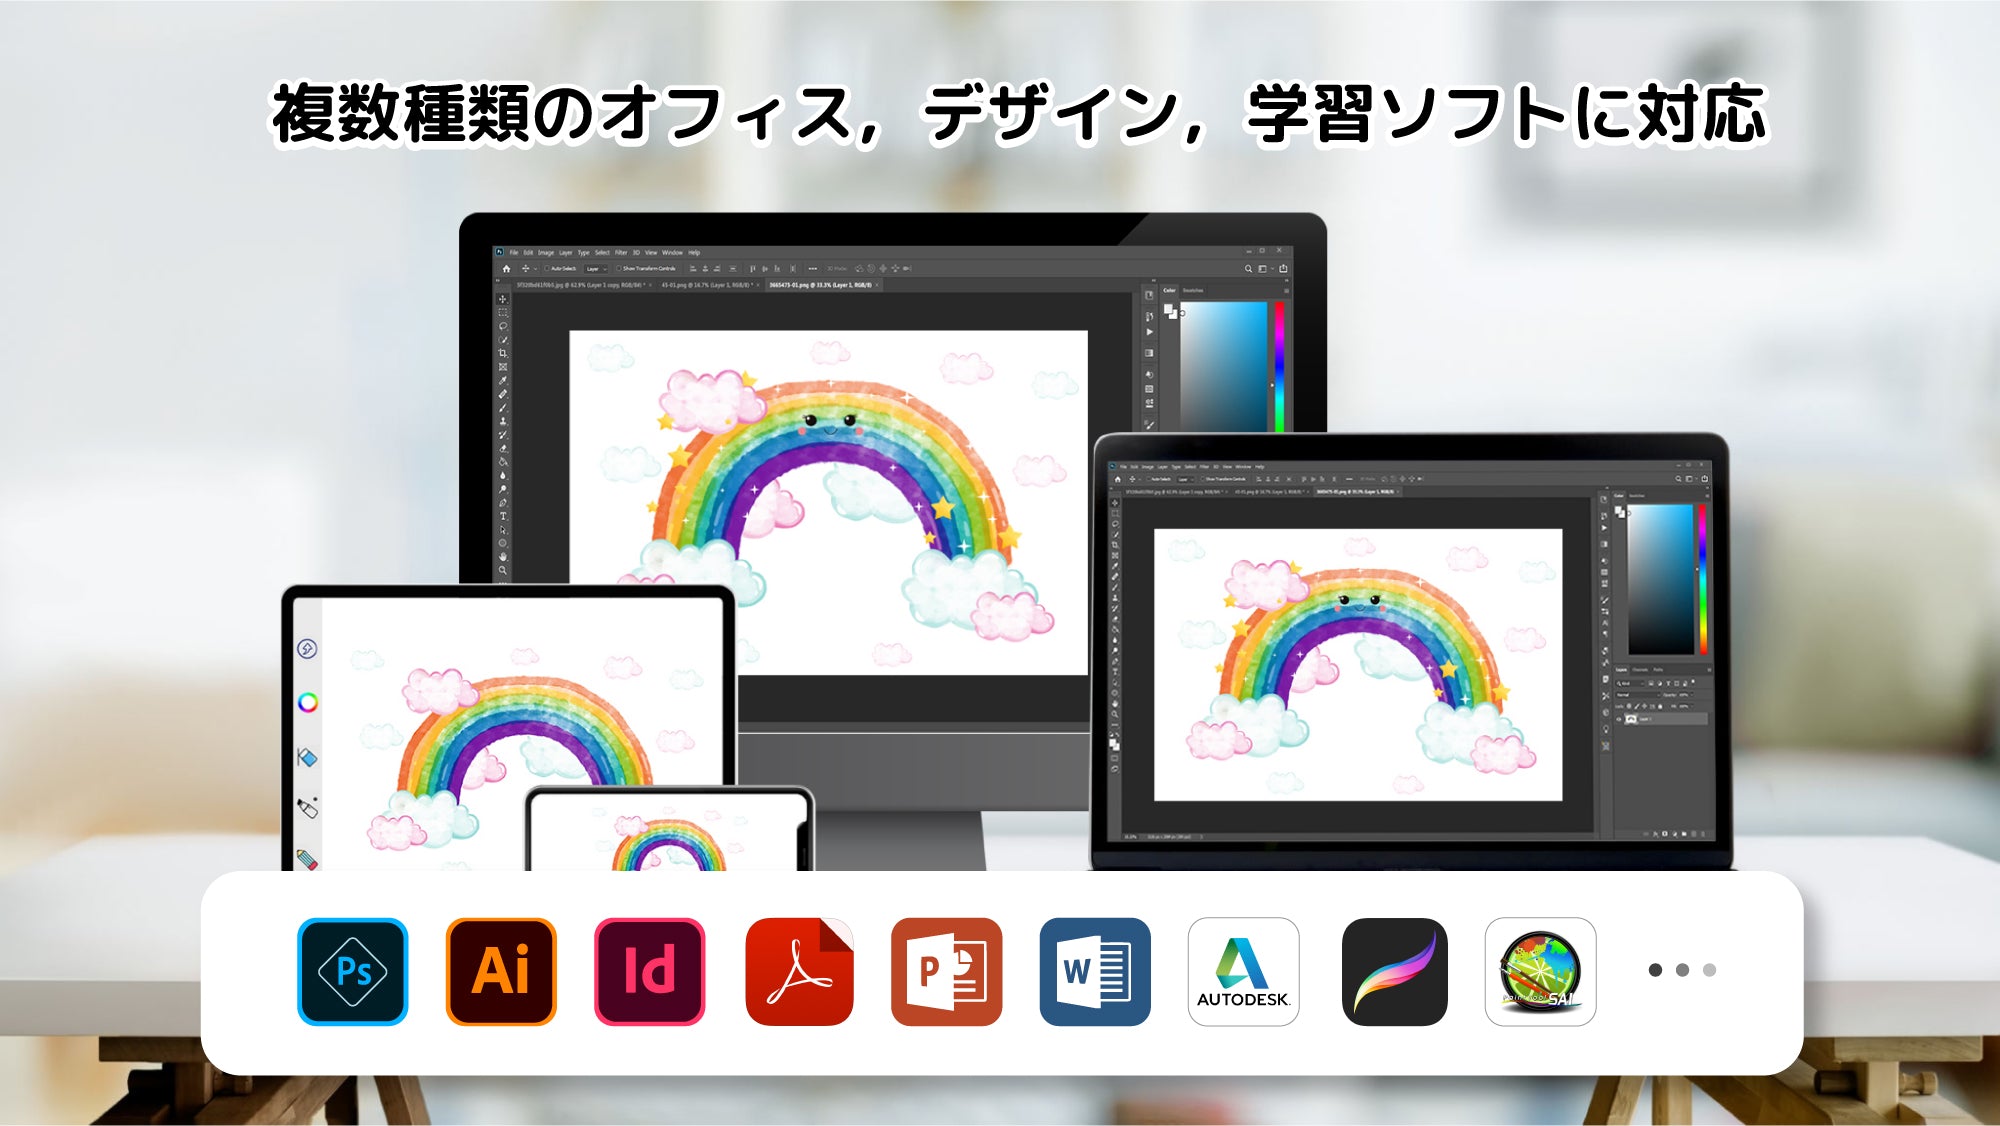 SketchBook  スケッチブック 10インチ　デジタルイラスト液晶ペンタブレット8192レベル筆圧/専用スマホアプリと連動/PCと連動/内蔵式メモリー | Oaxis Japan.